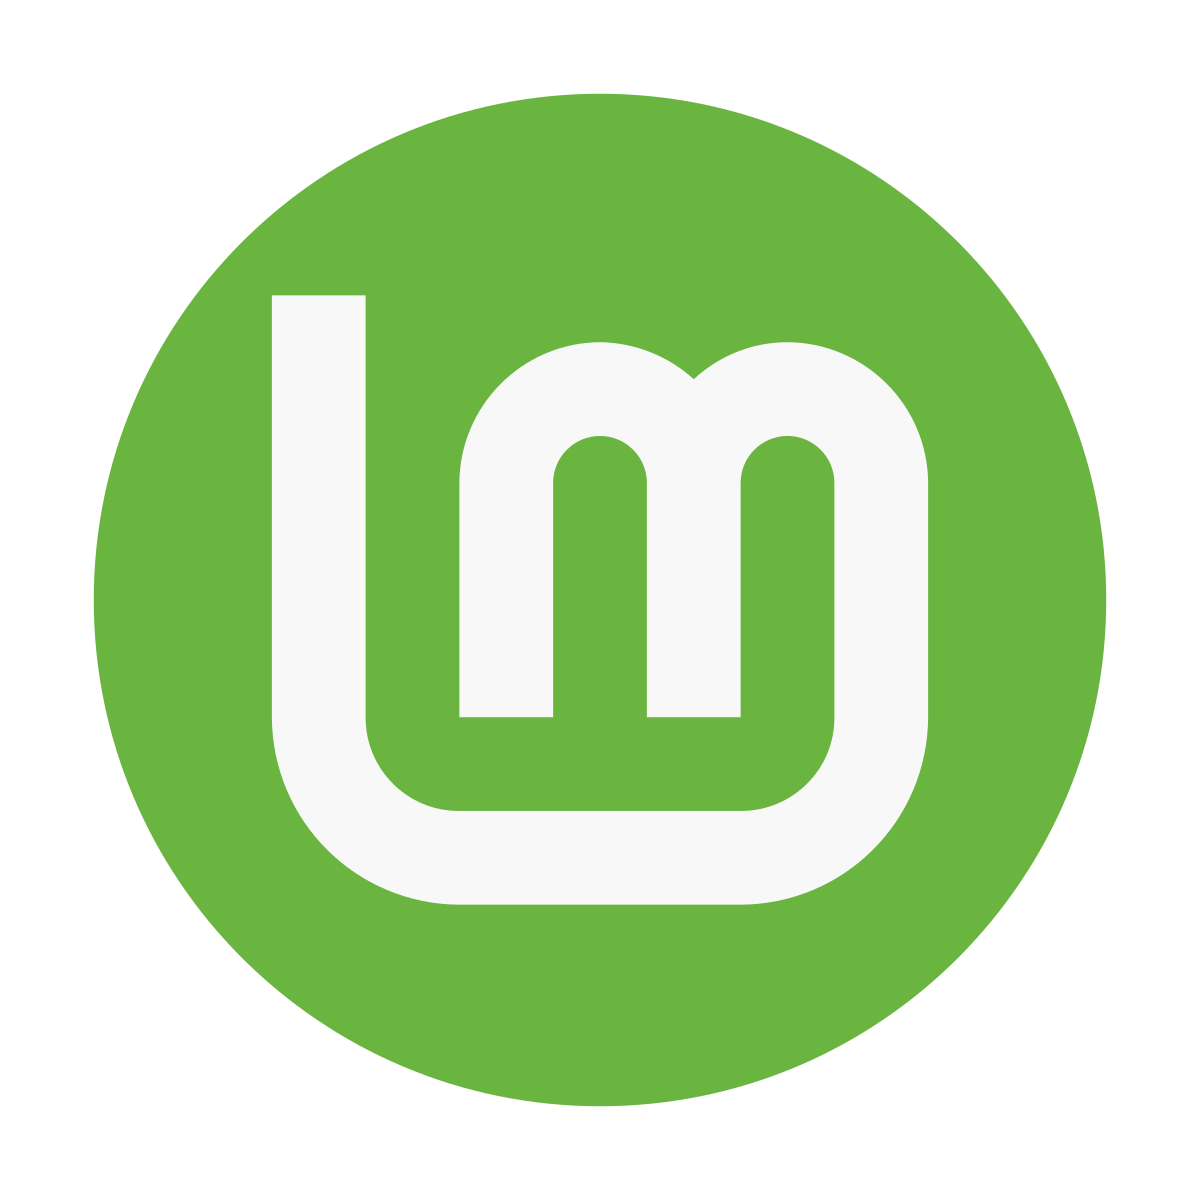 Download Linux Mint ISO Terbaru